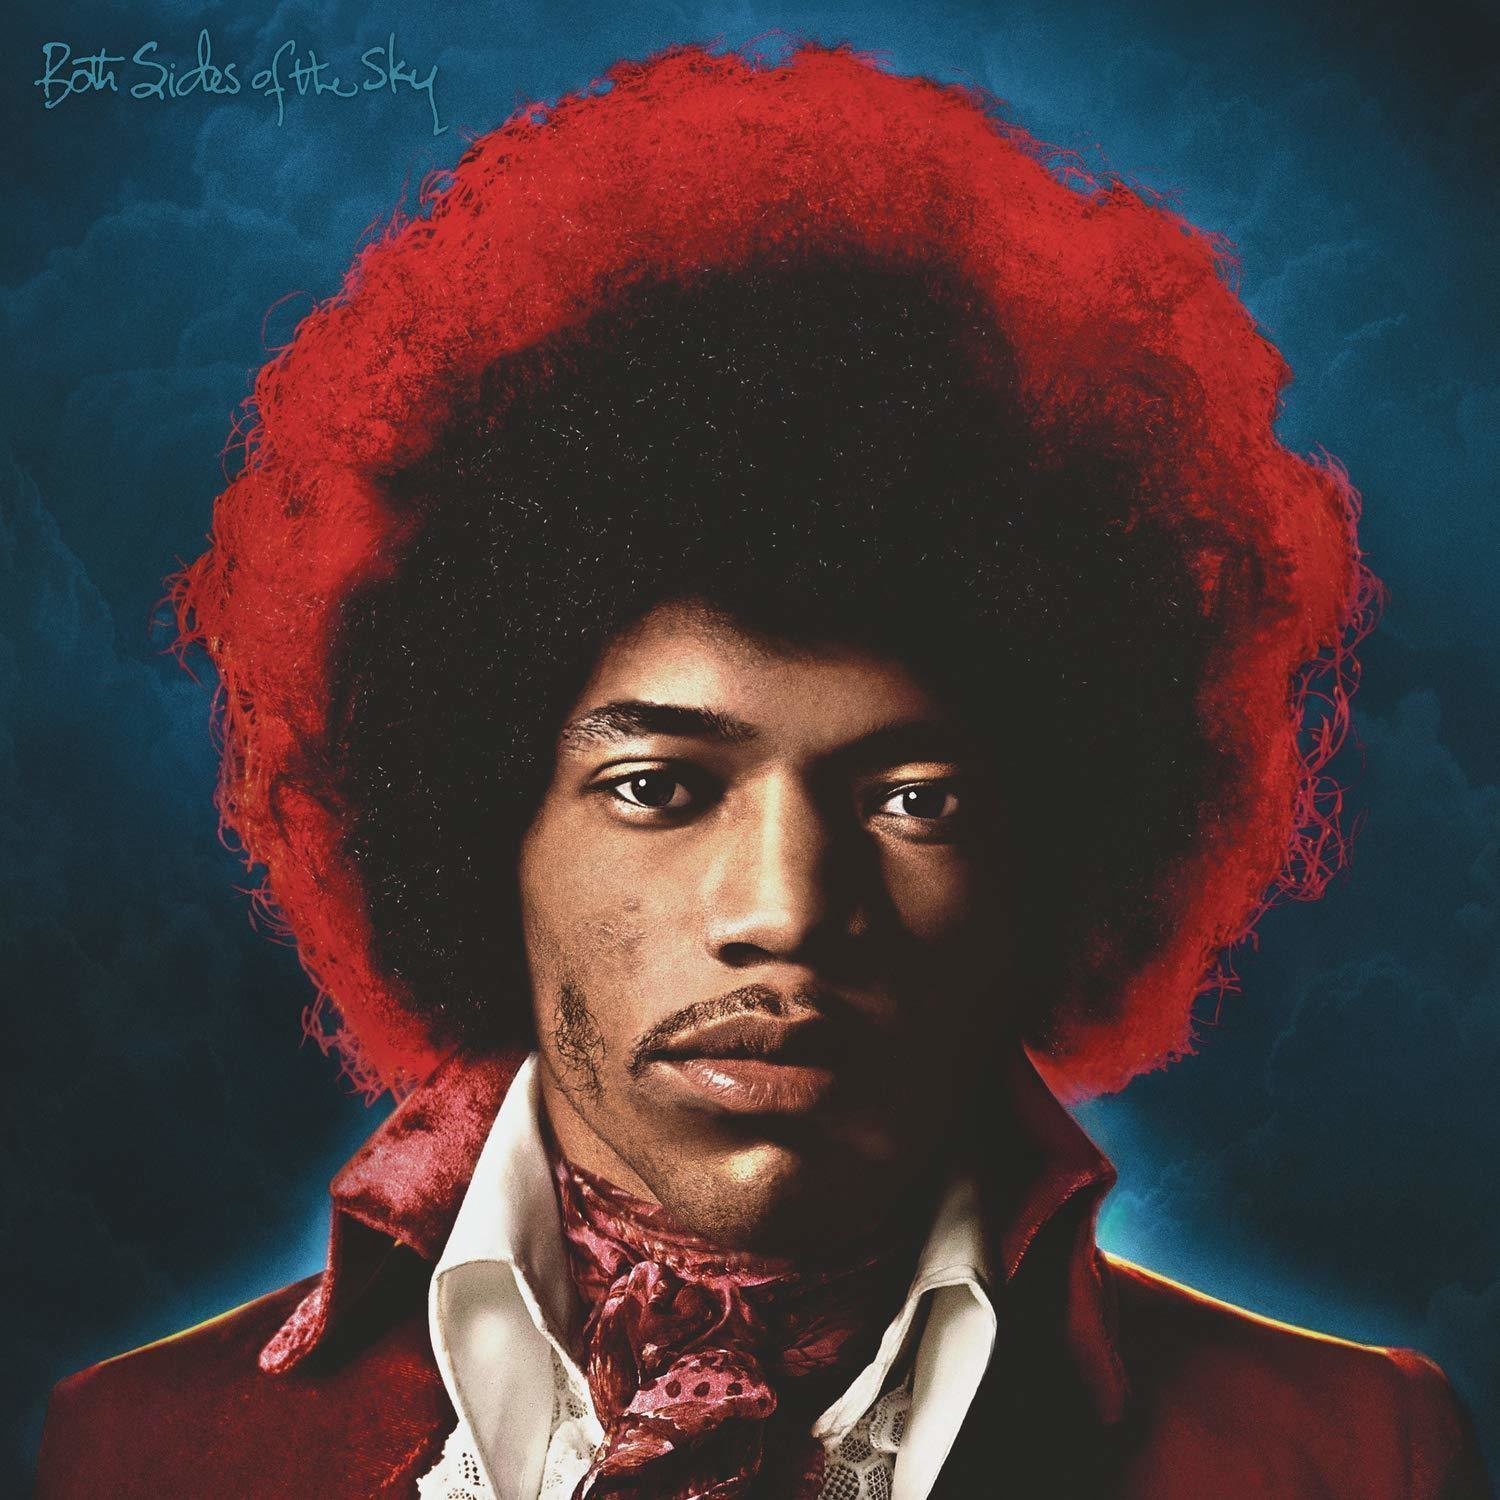 Vinyl Record Jimi Hendrix Both Sides of the Sky (2 LP)